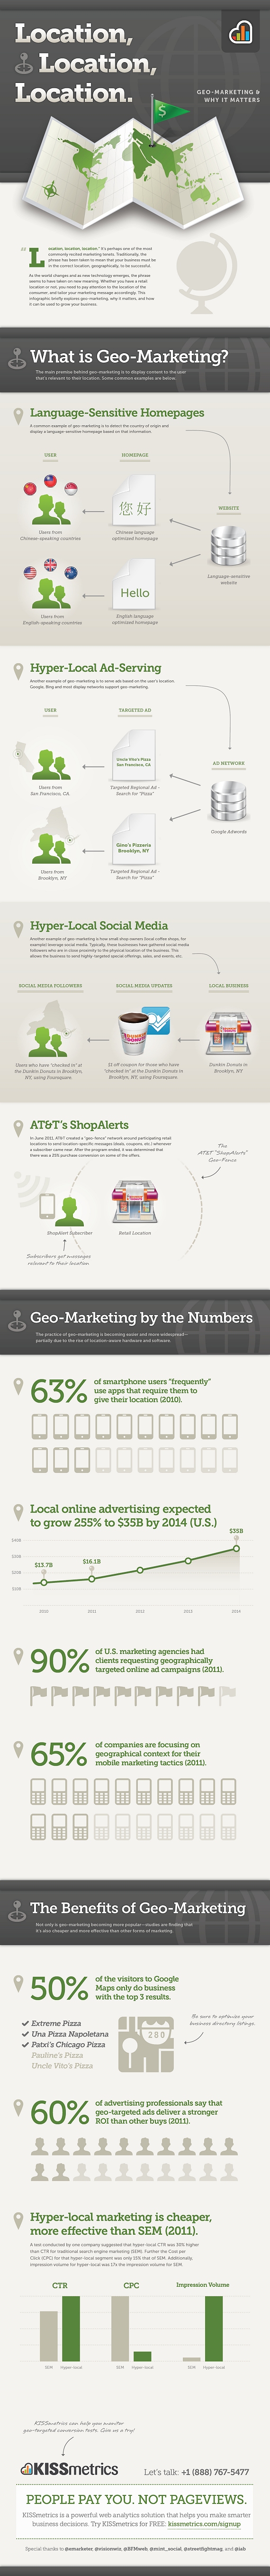 Geo-marketing & Why it Matters